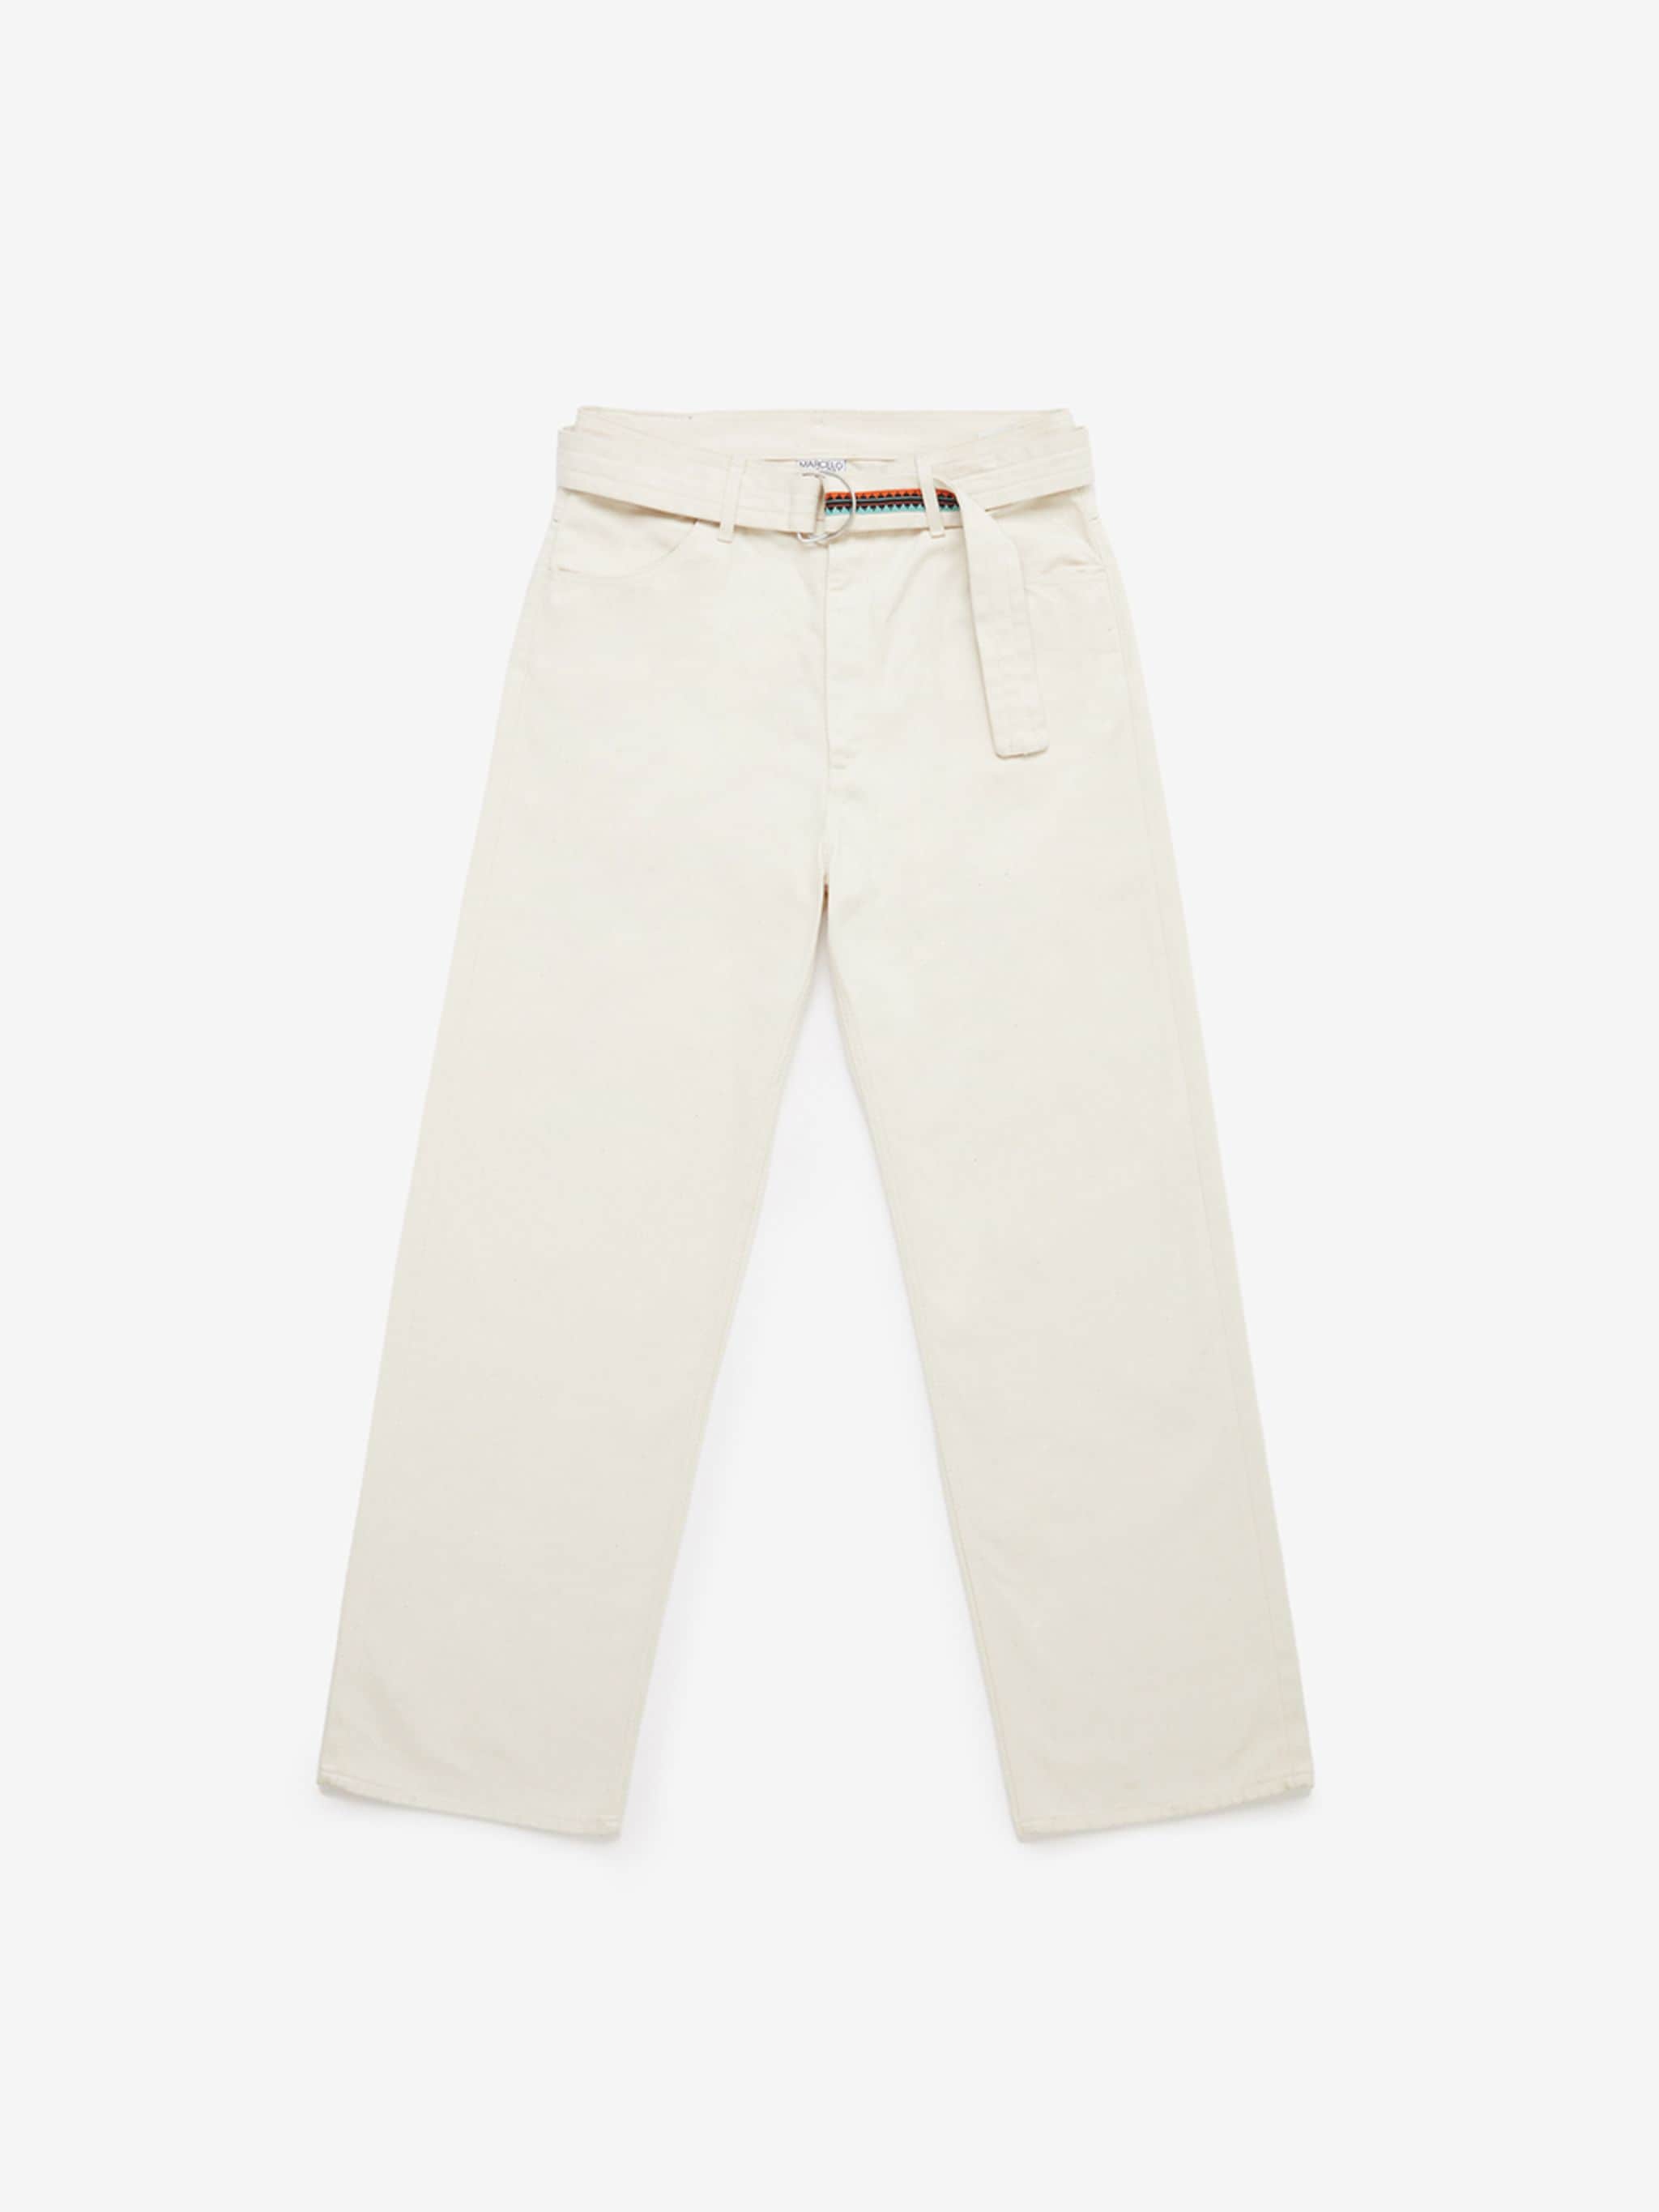 white cotton signature Cross motif belted waist straight leg classic five pockets